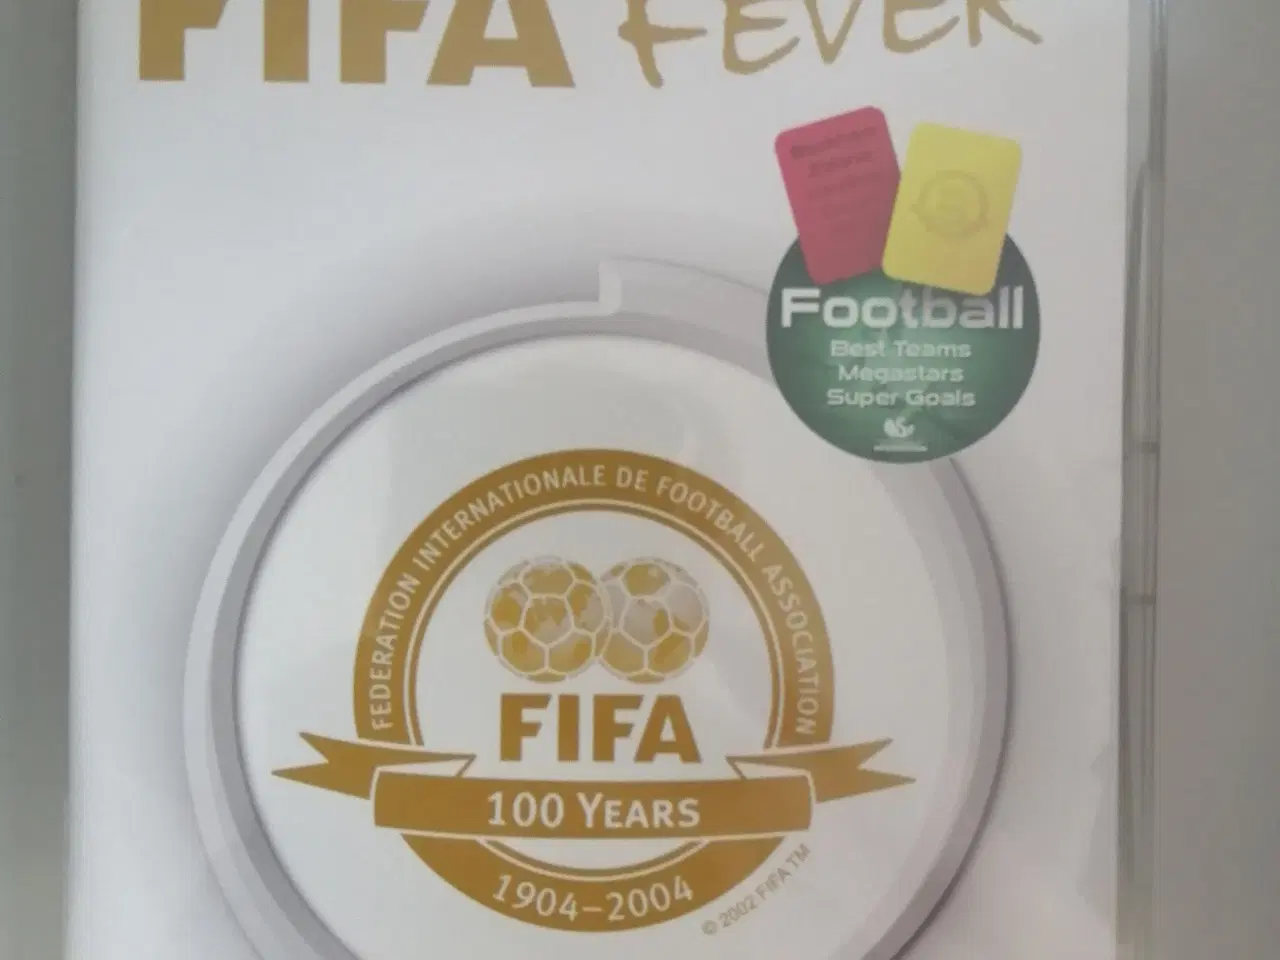 Billede 1 - Fifa Fever 100 years